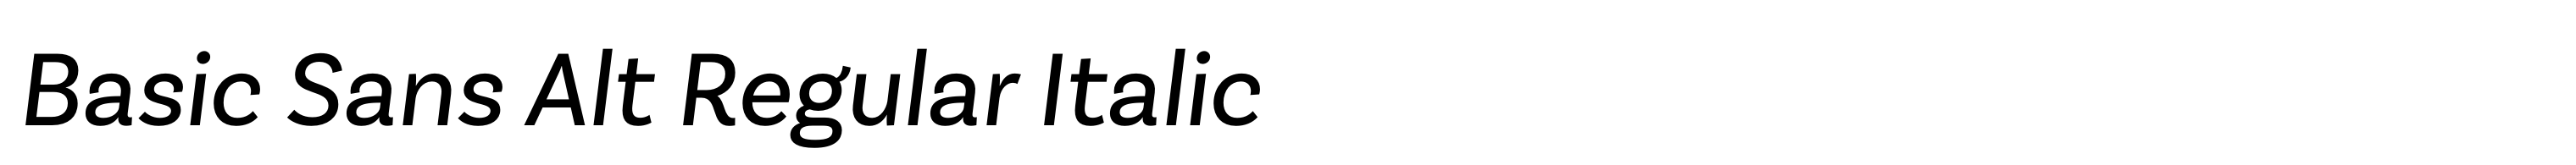 Basic Sans Alt Regular Italic